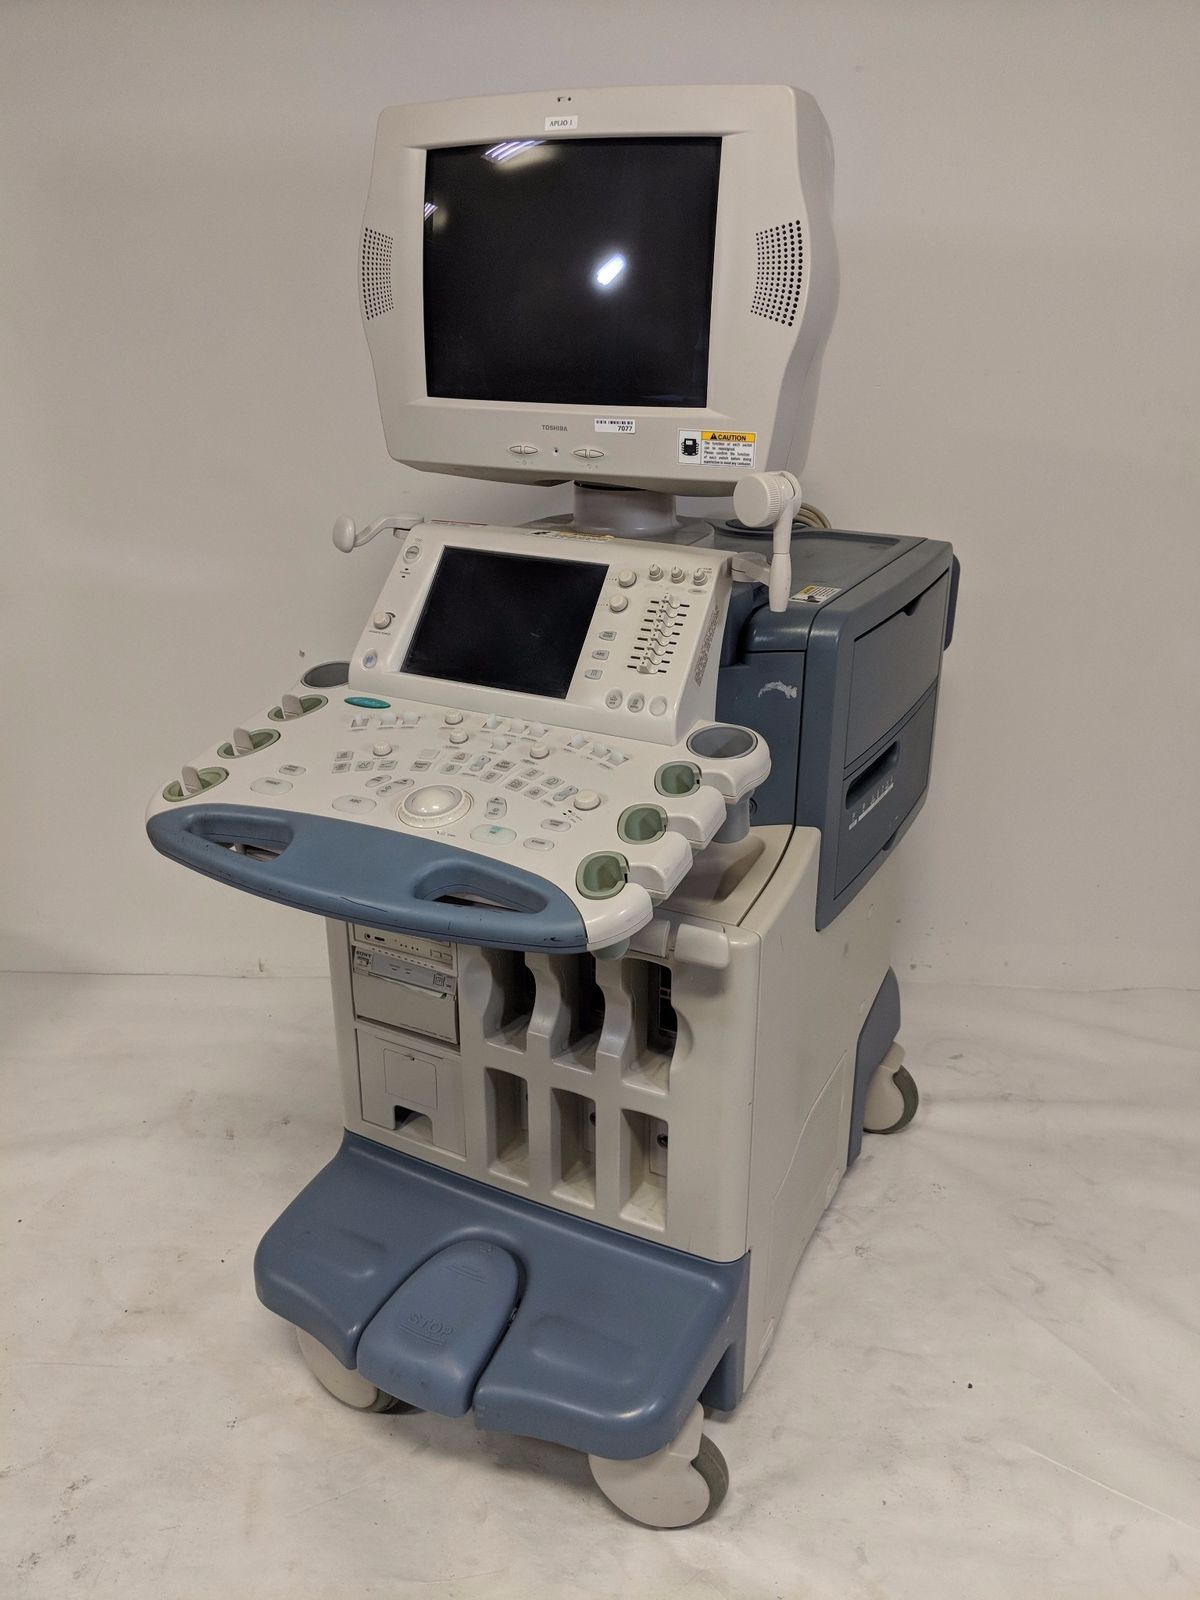 Toshiba Aplio 80 Diagnostic Ultrasound Machine SSA-770A - with Probes DIAGNOSTIC ULTRASOUND MACHINES FOR SALE